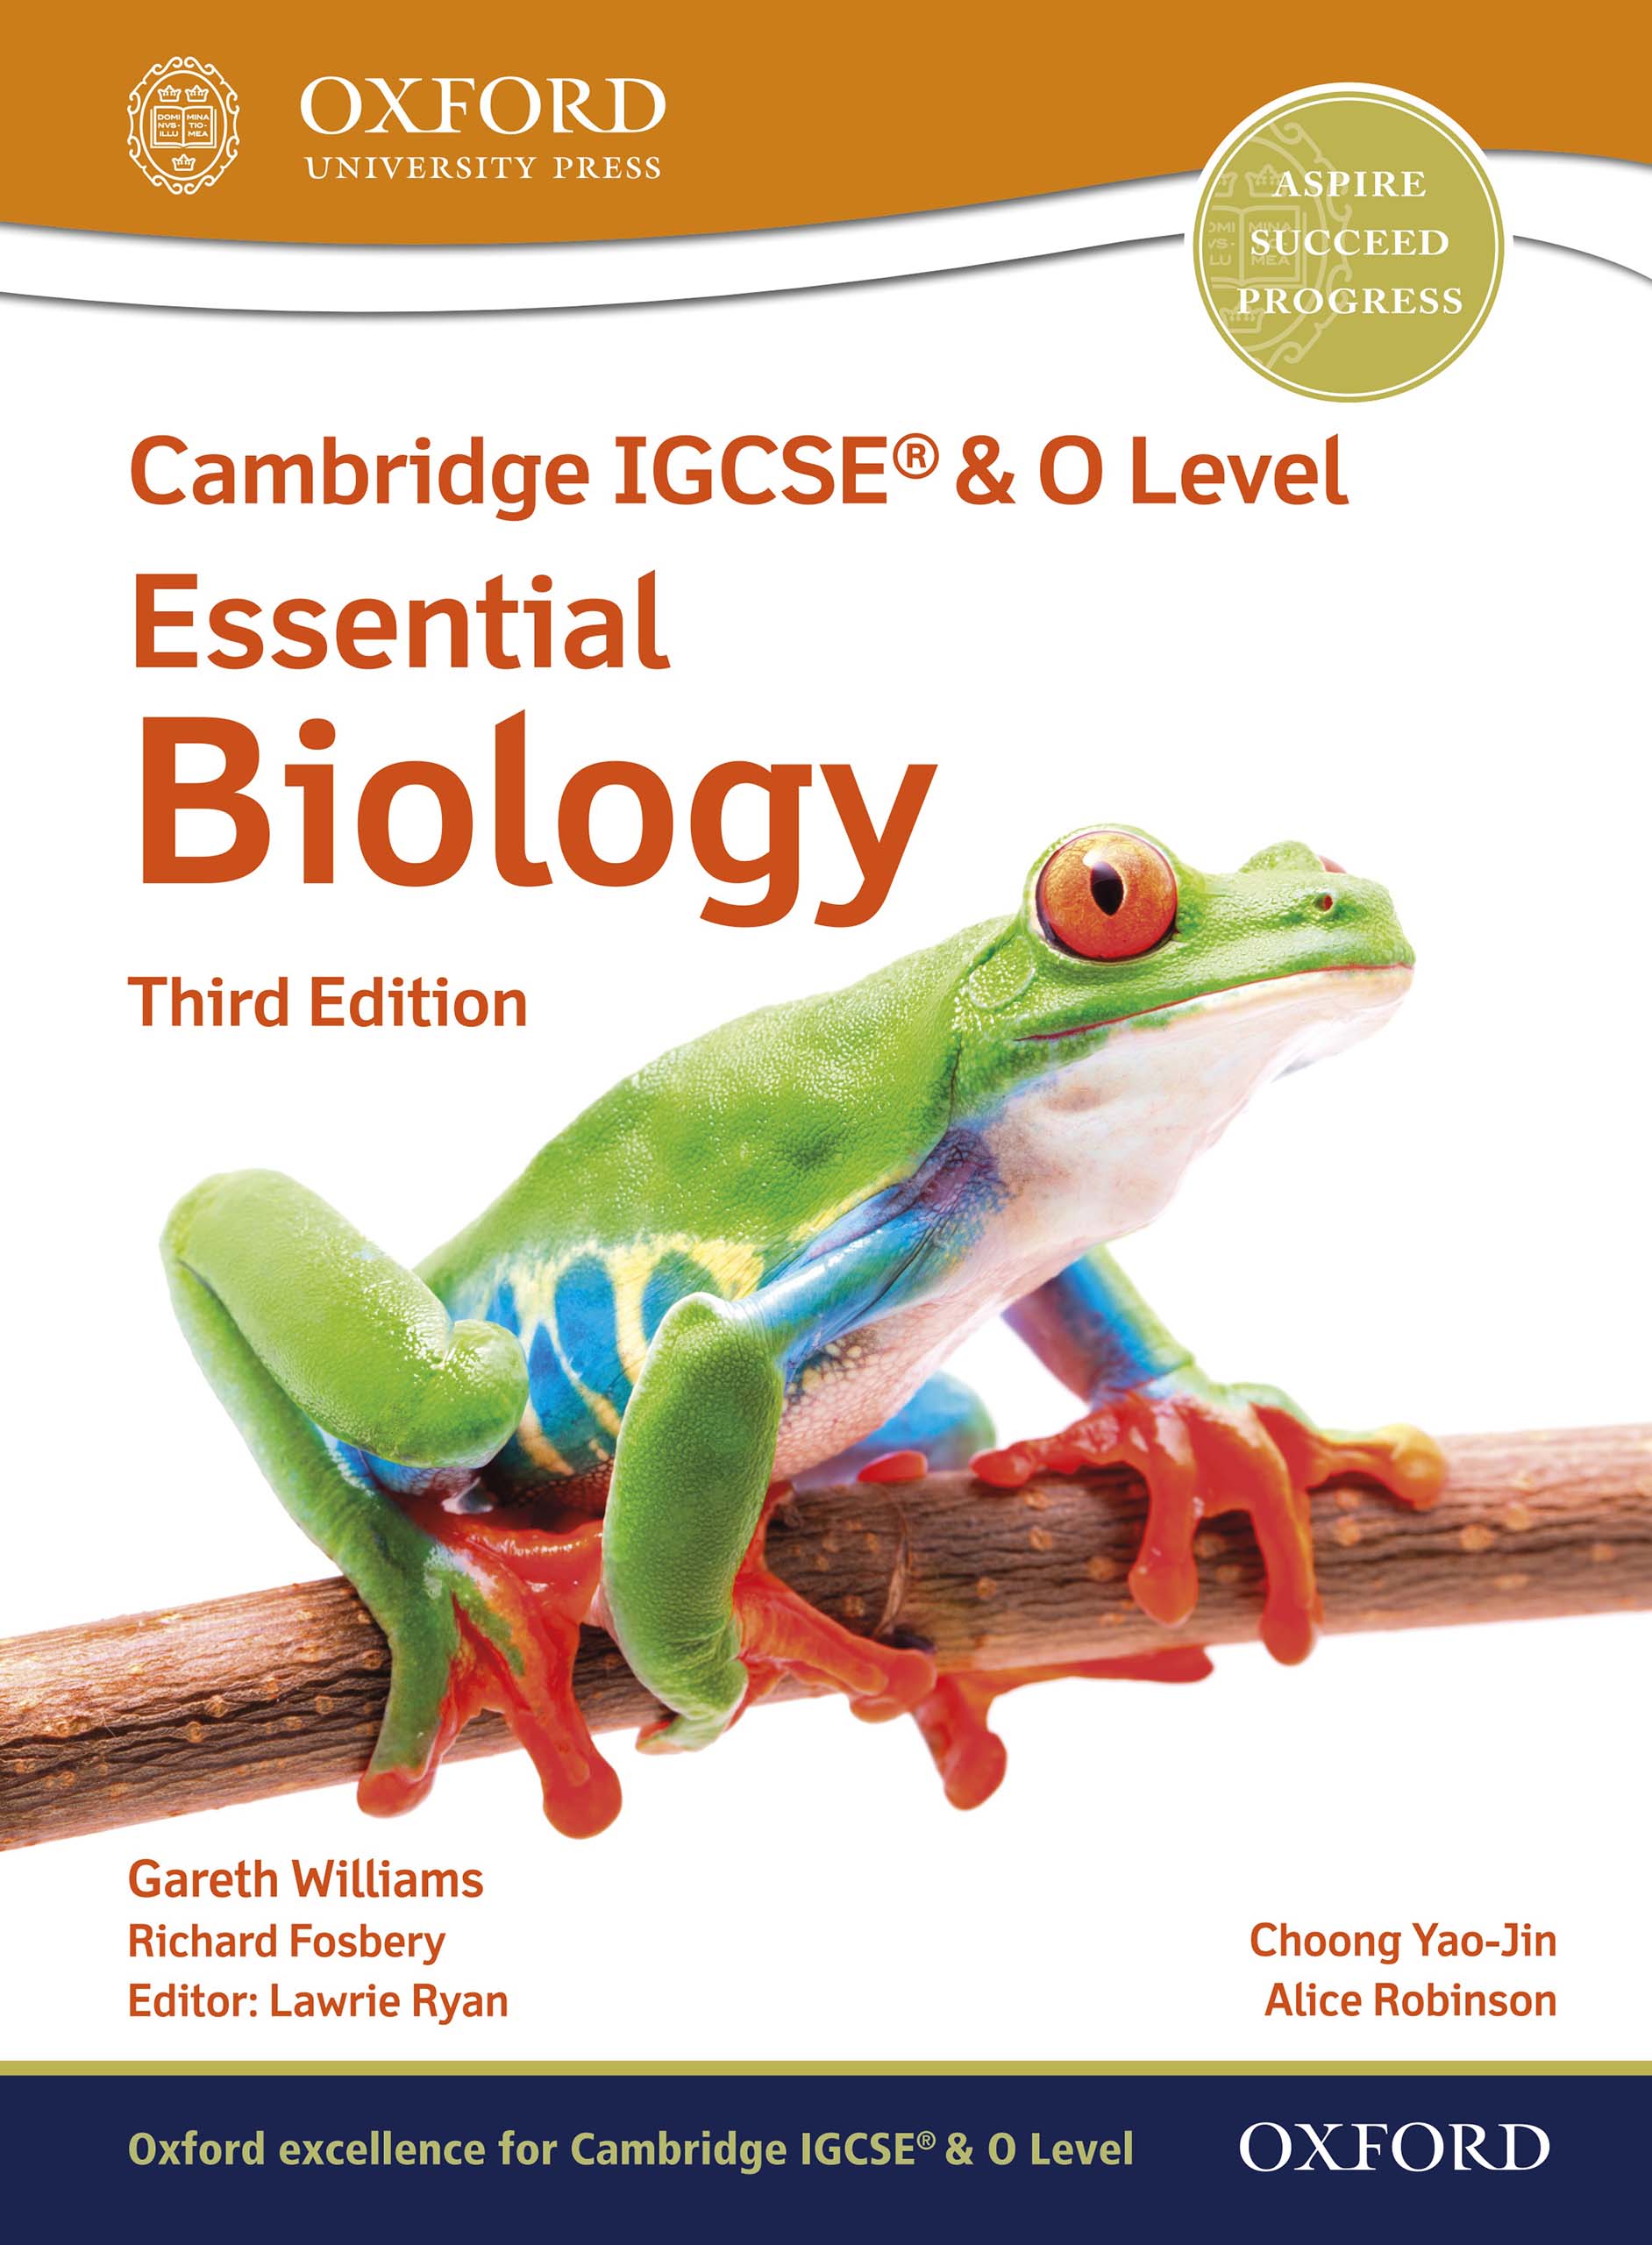 [PDF] Ebook Oxford Cambridge IGCSE and O Level Essential Biology